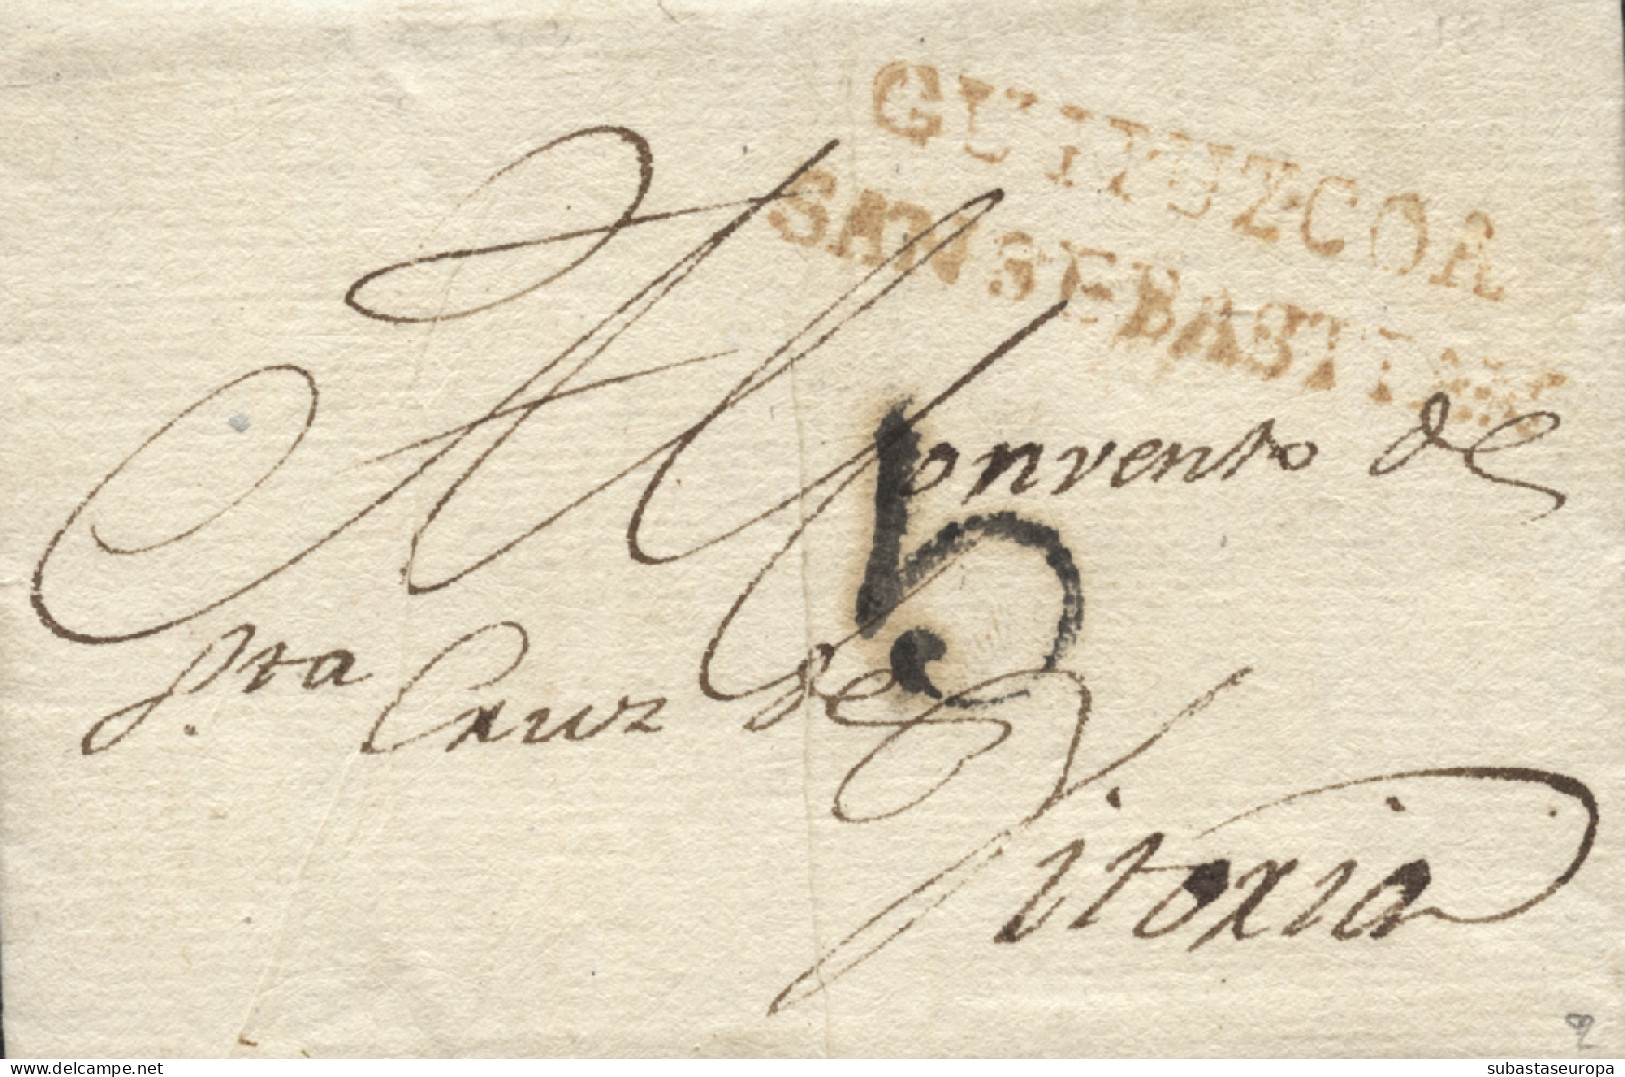 D.P. 11. 1812 (8 JUN). Carta De San Sebastián A Vitoria. Marca Nº 20R. Porteo 5 Mms. Preciosa. - ...-1850 Prephilately